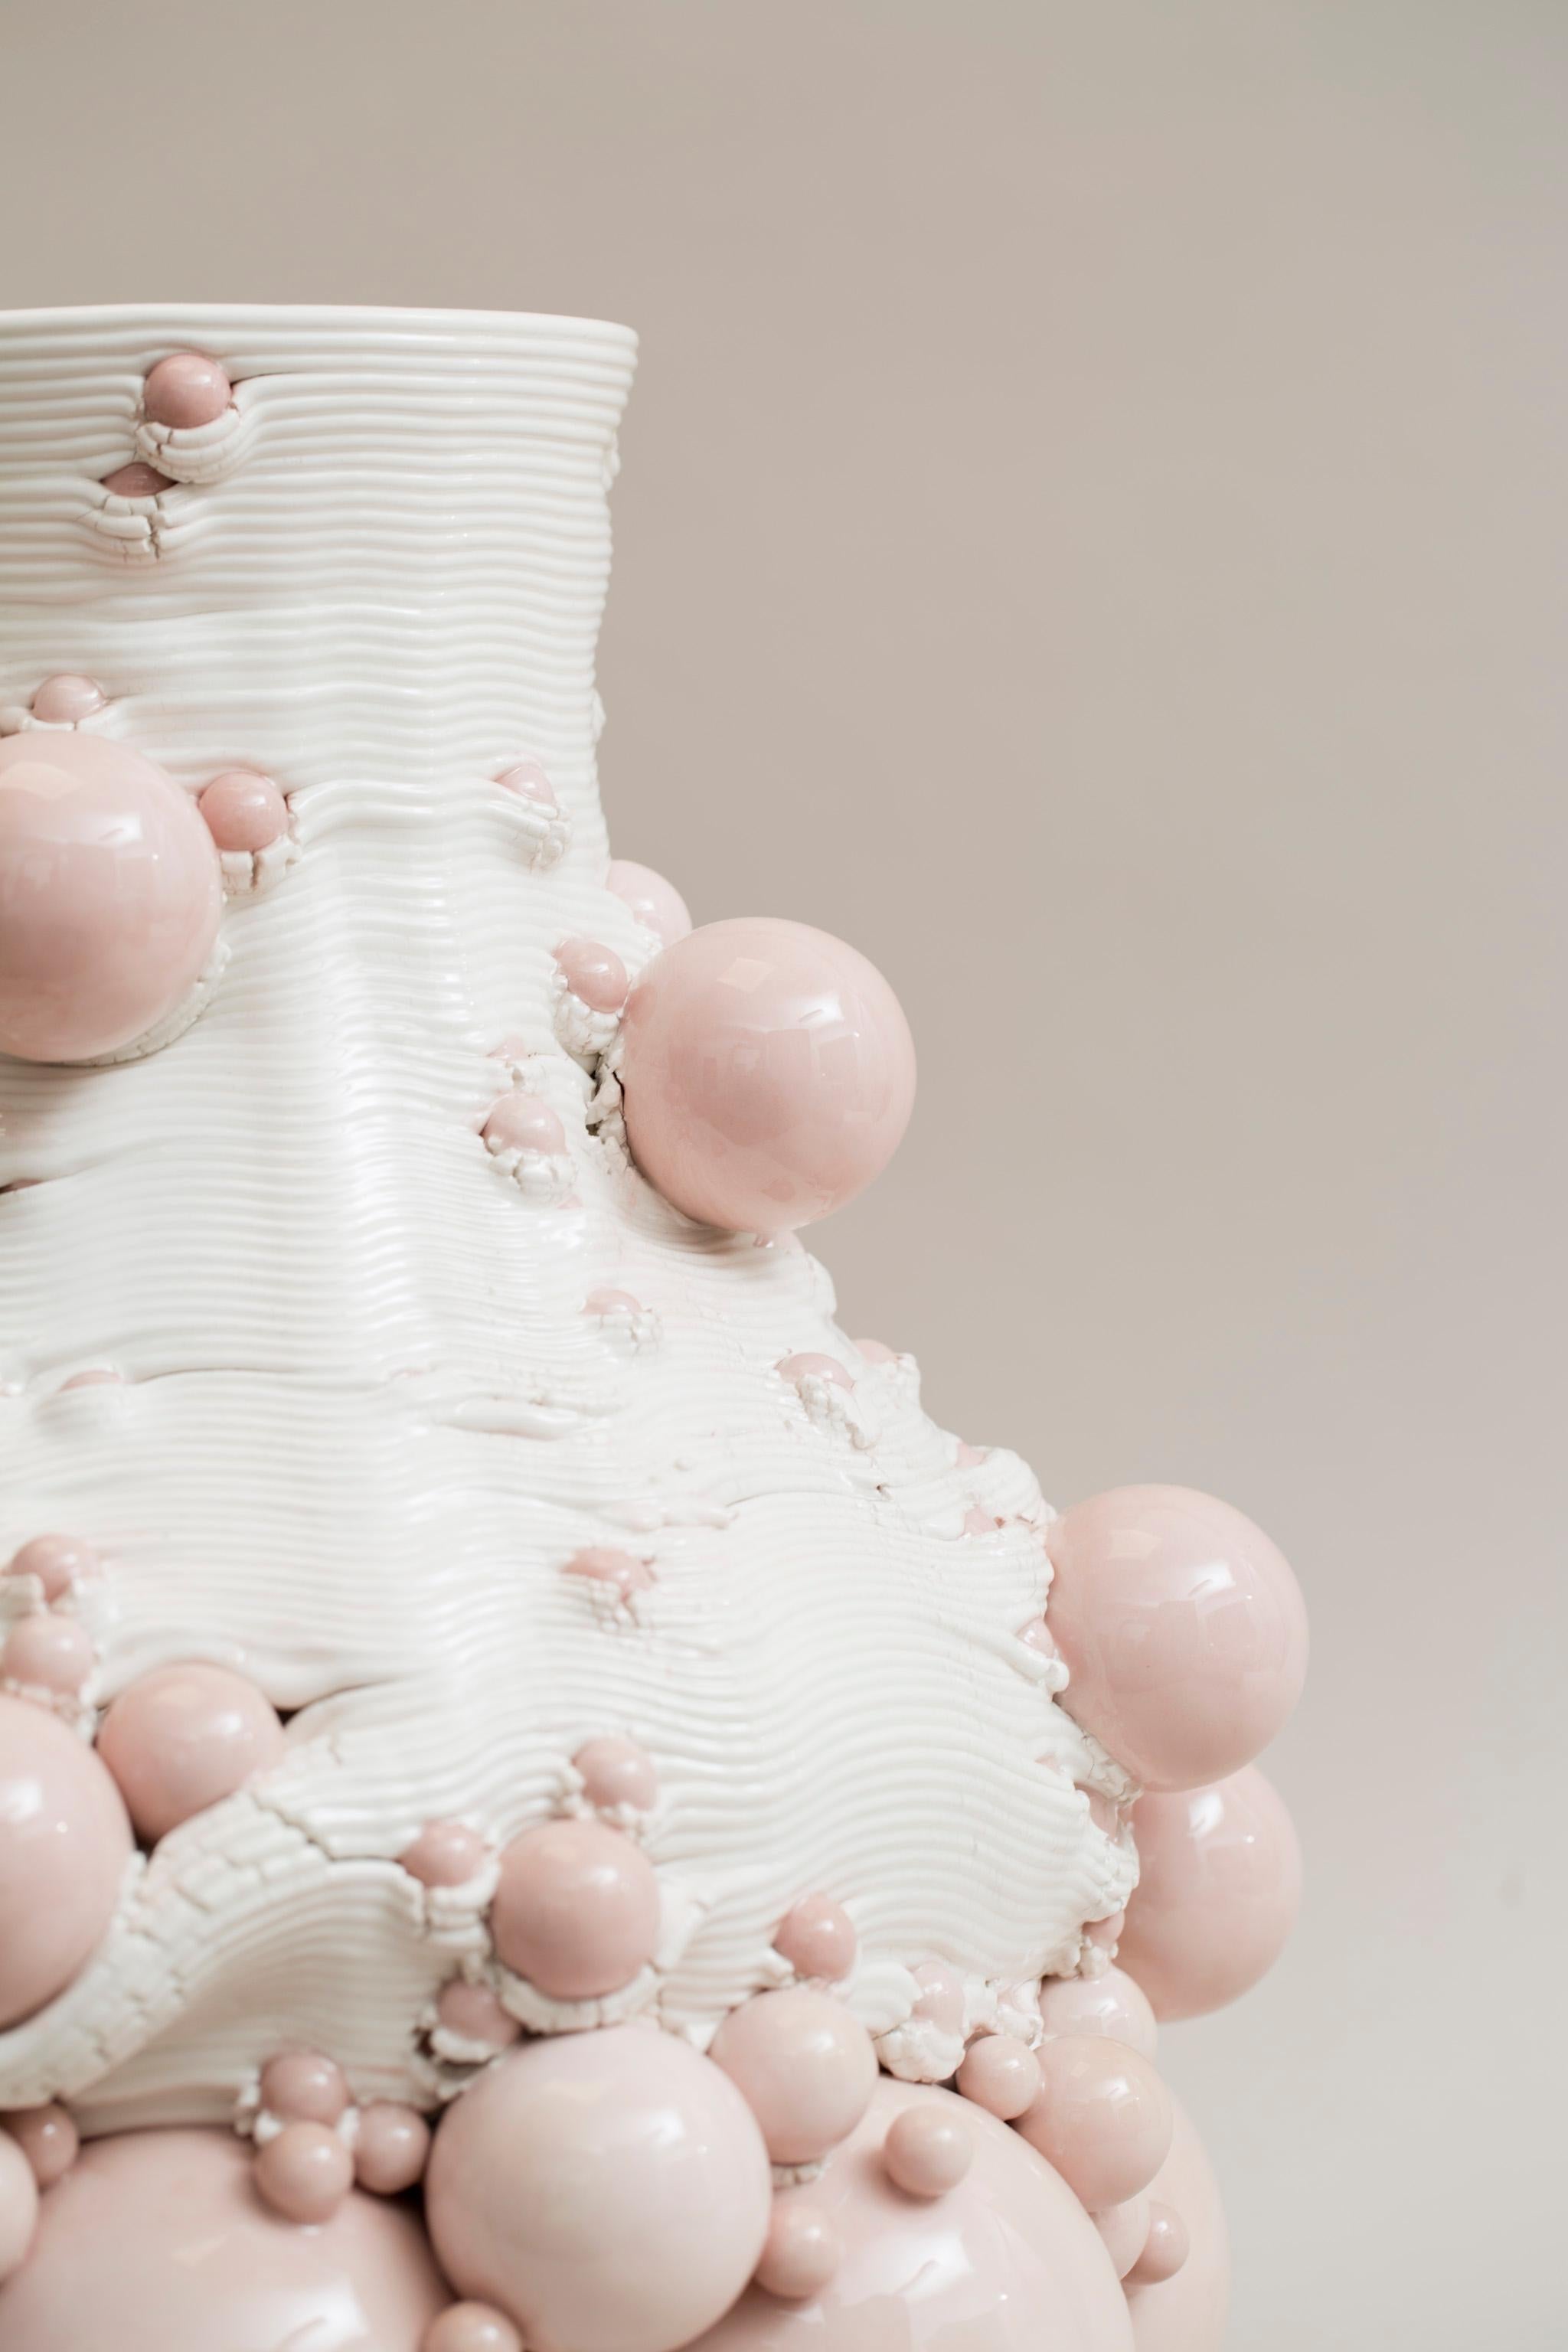 White Ceramic Sculptural Vase Italian Contemporary, 21st Century contemporary For Sale 6